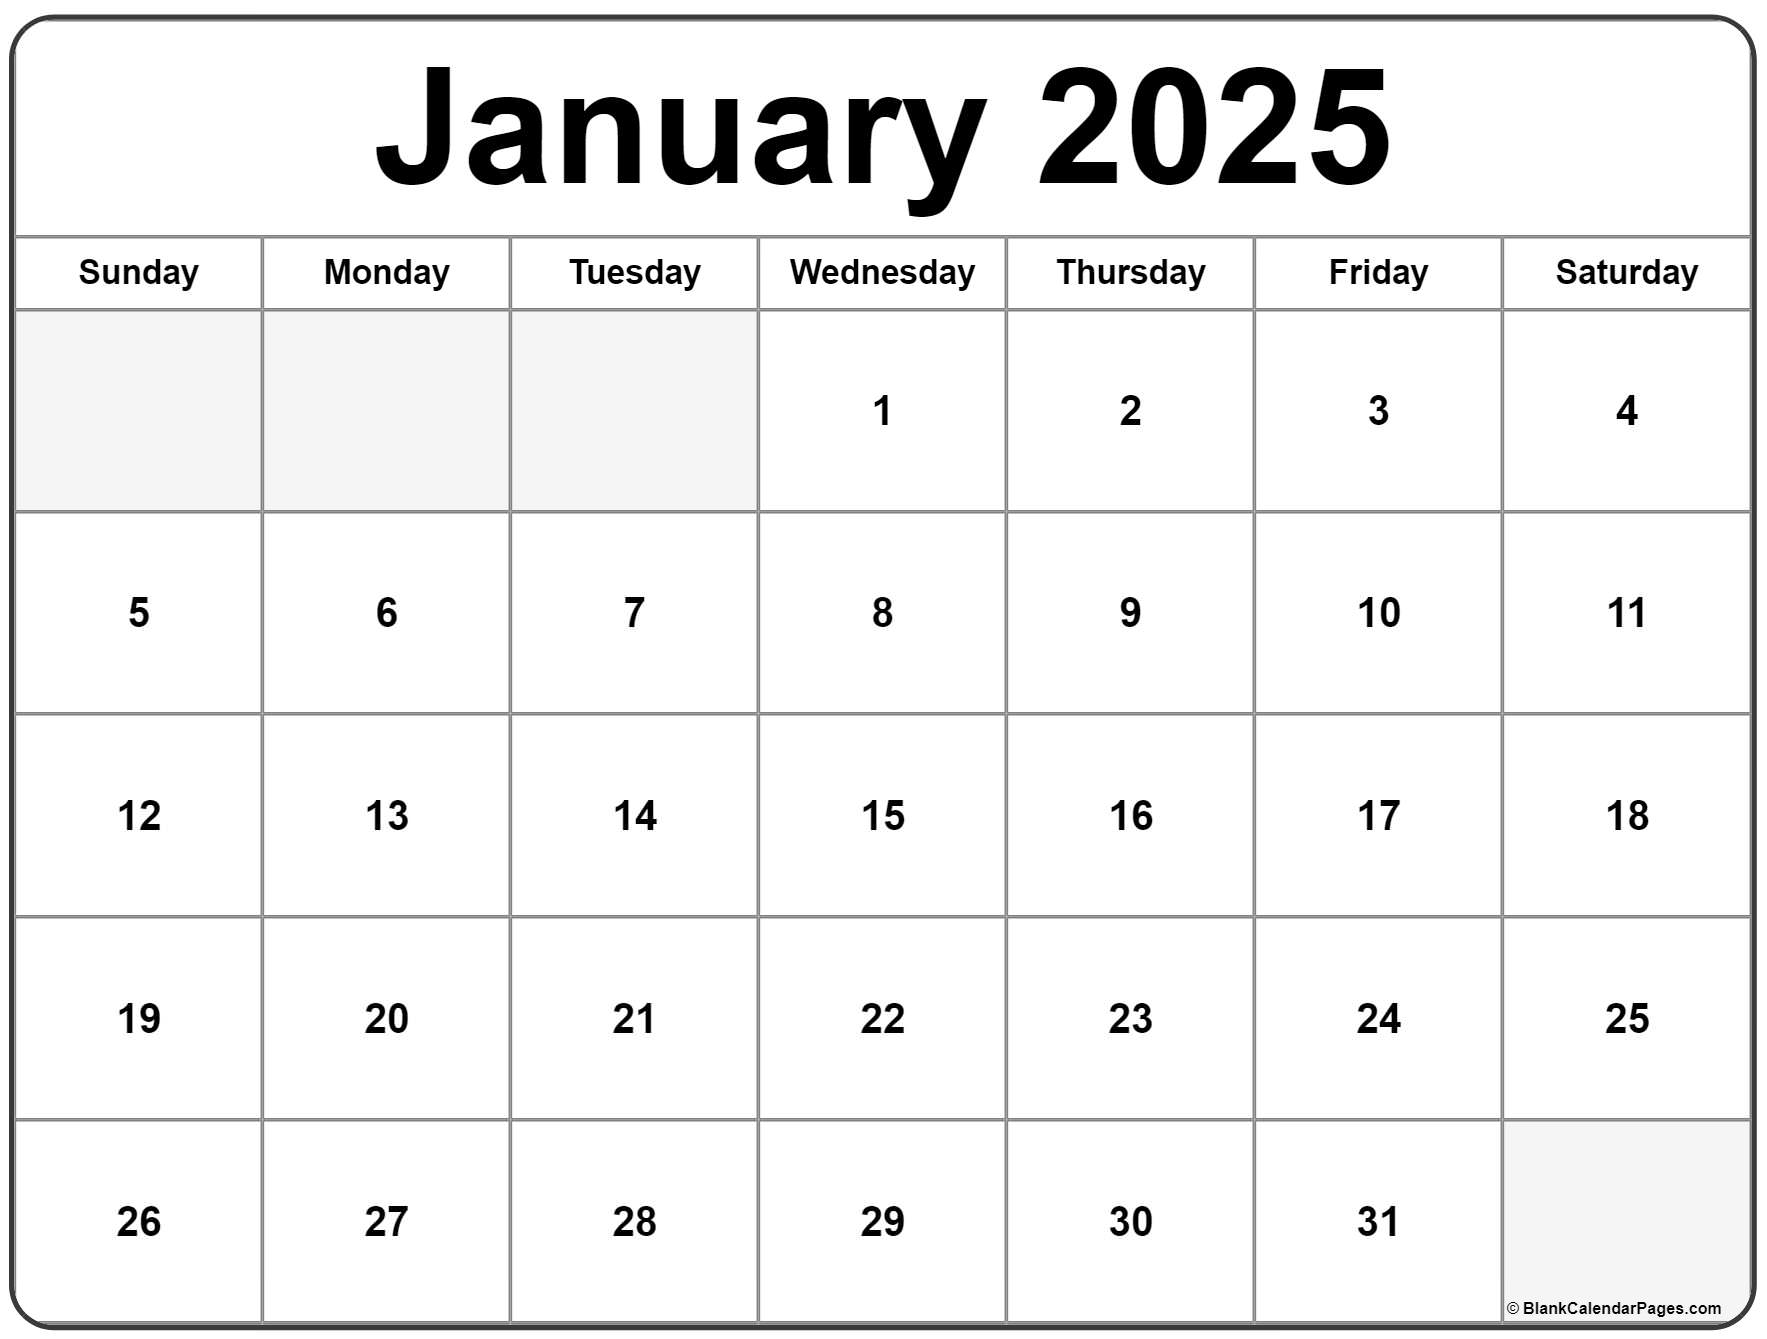 January 2025 calendar | free printable calendar